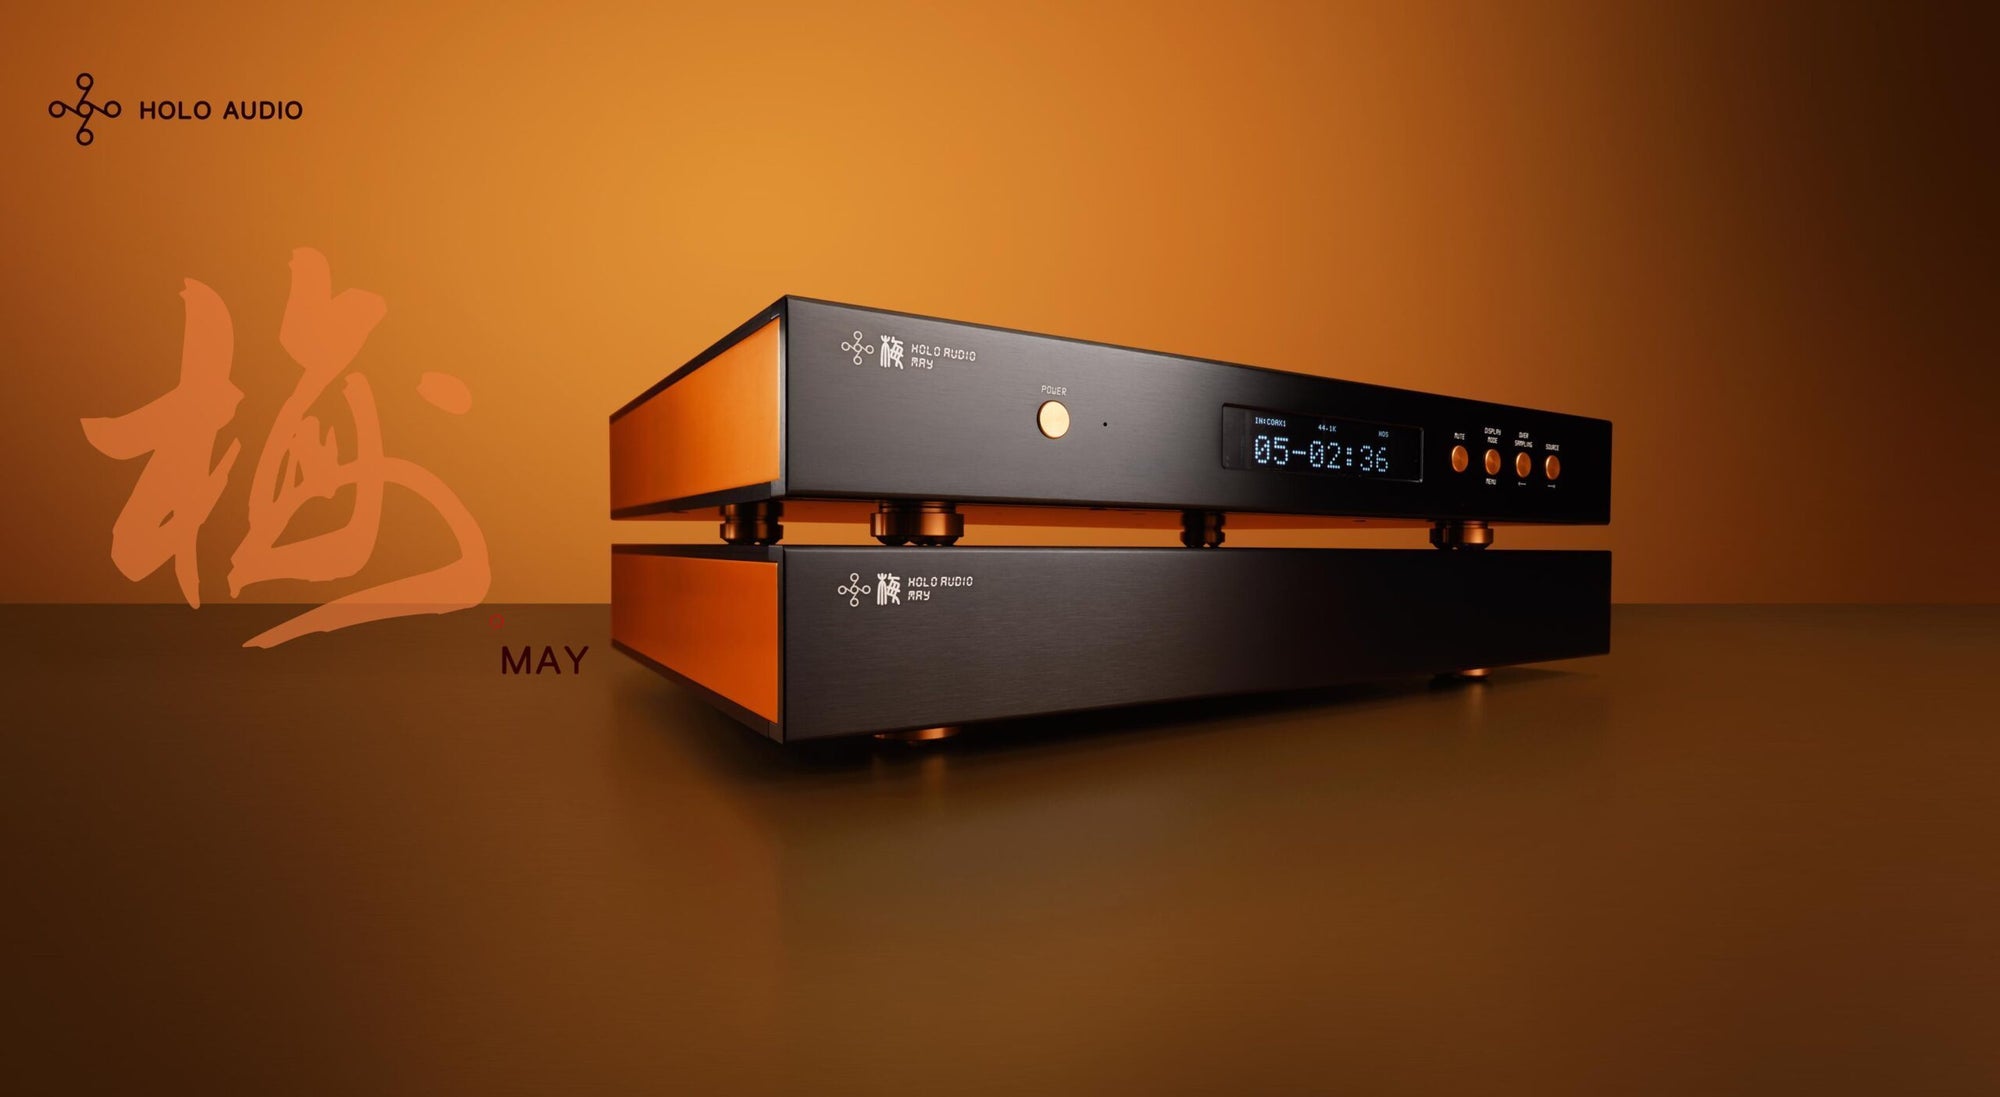 Holo Audio R2R – May DAC